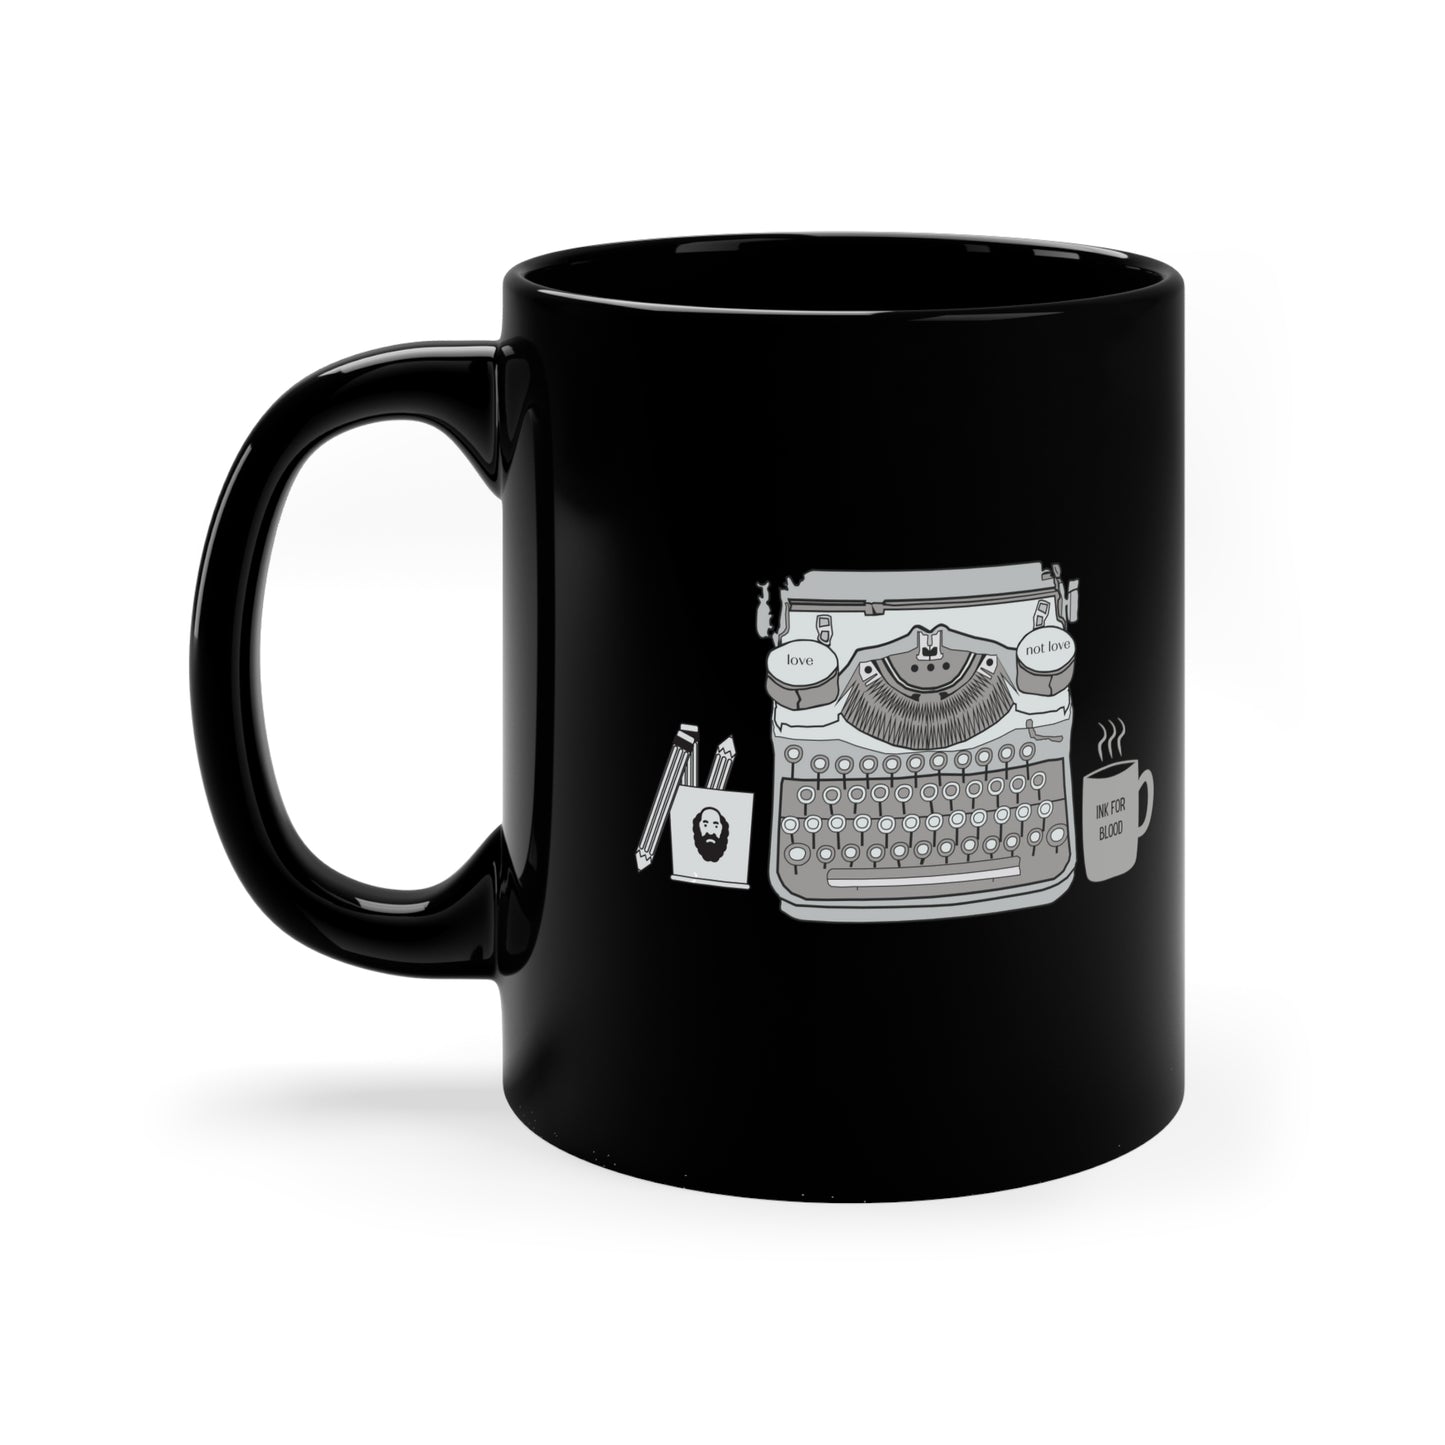 Write Good, Edit Gooder Coffee Mug (11oz )